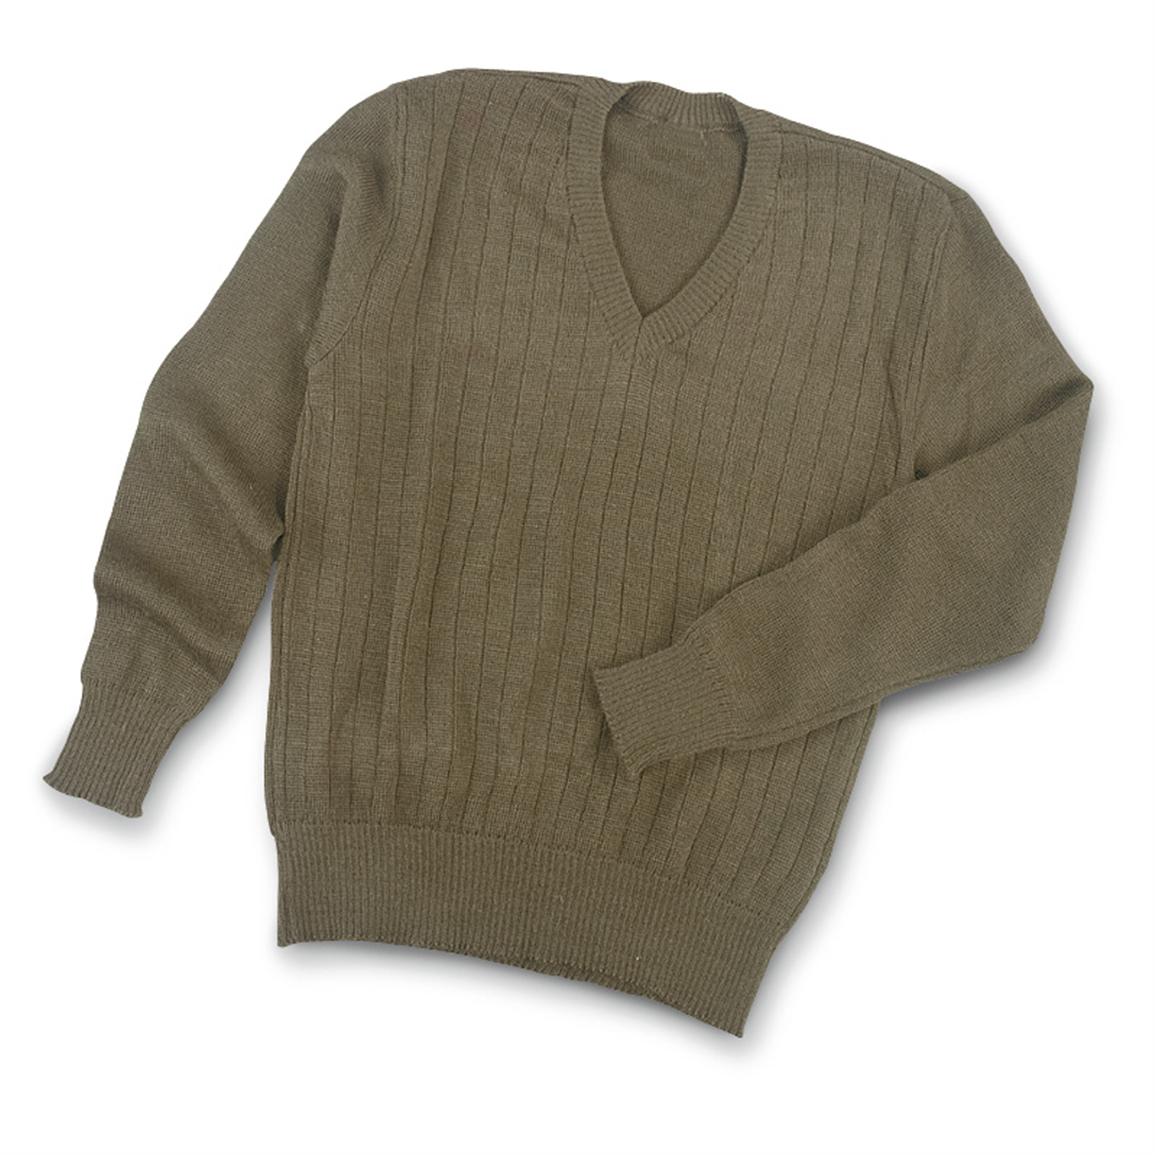 Czech Military Surplus Wool Blend Sweaters